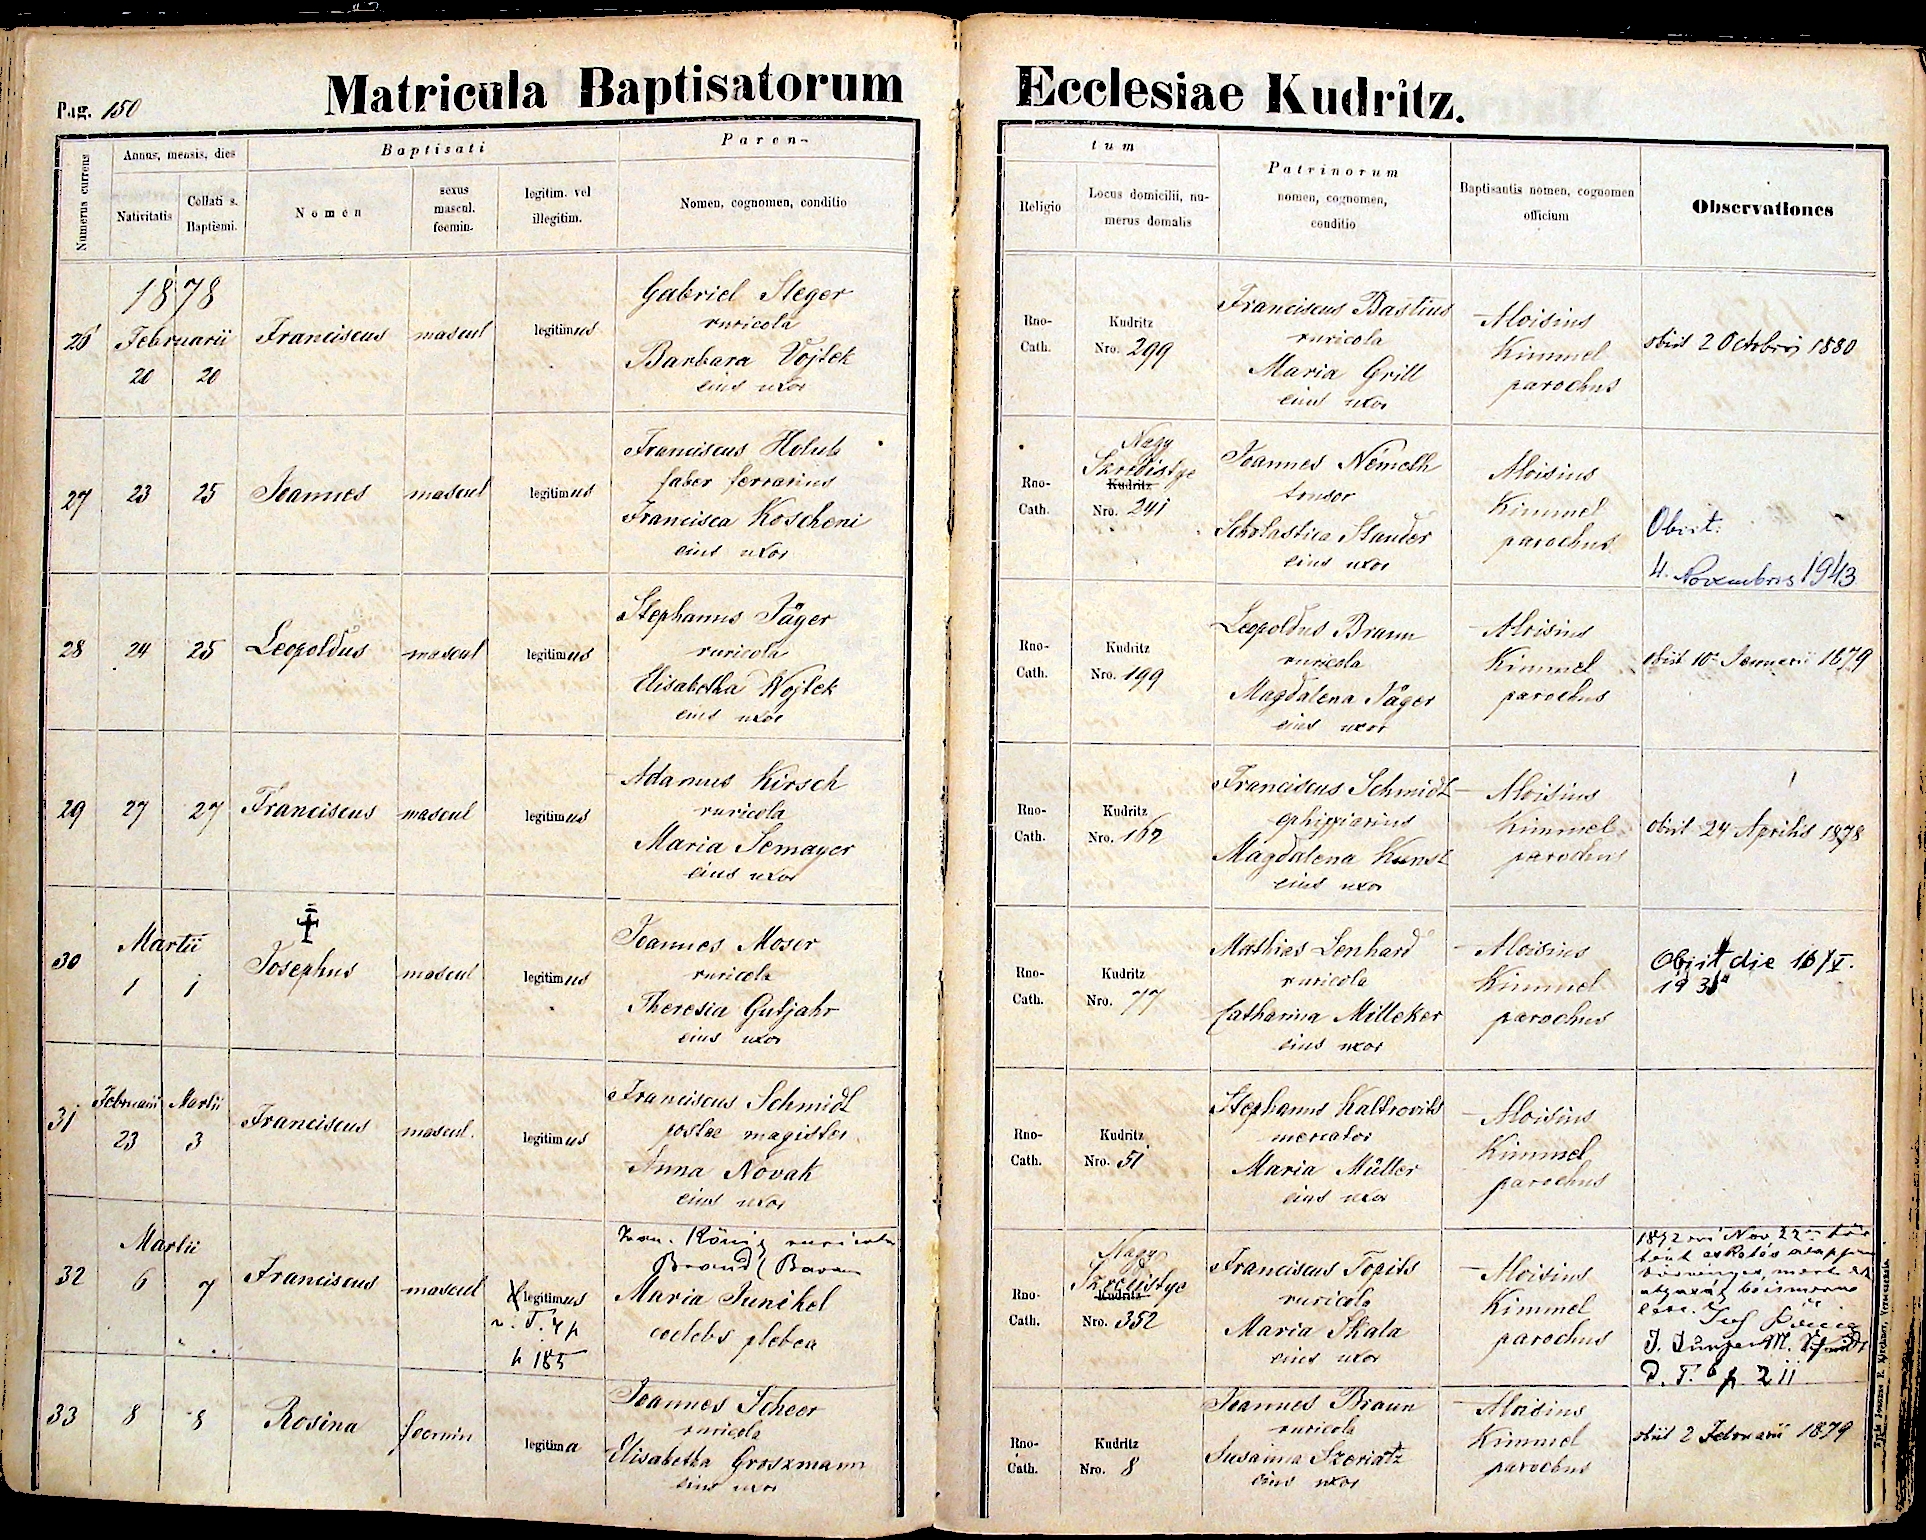 images/church_records/BIRTHS/1884-1899B/1894/150